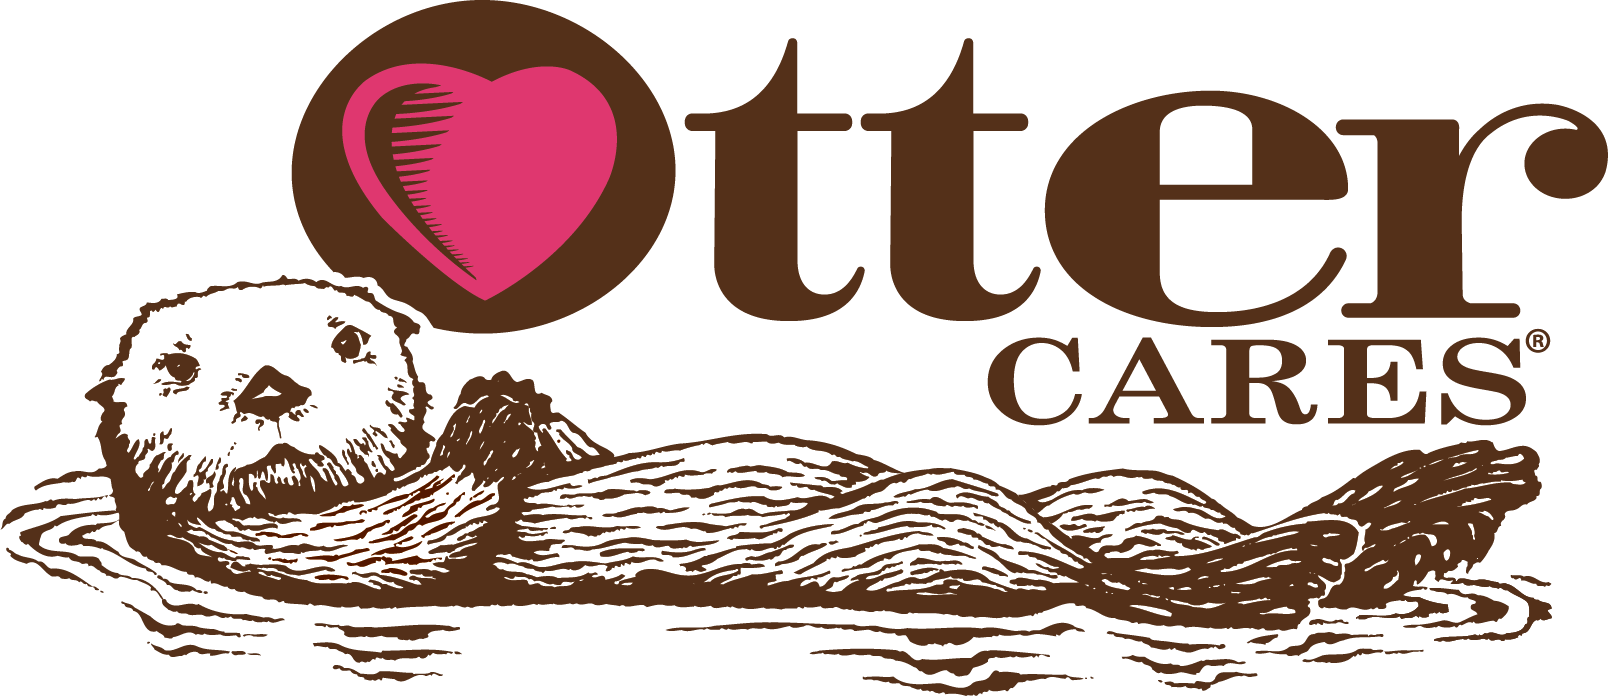 Otter Cares